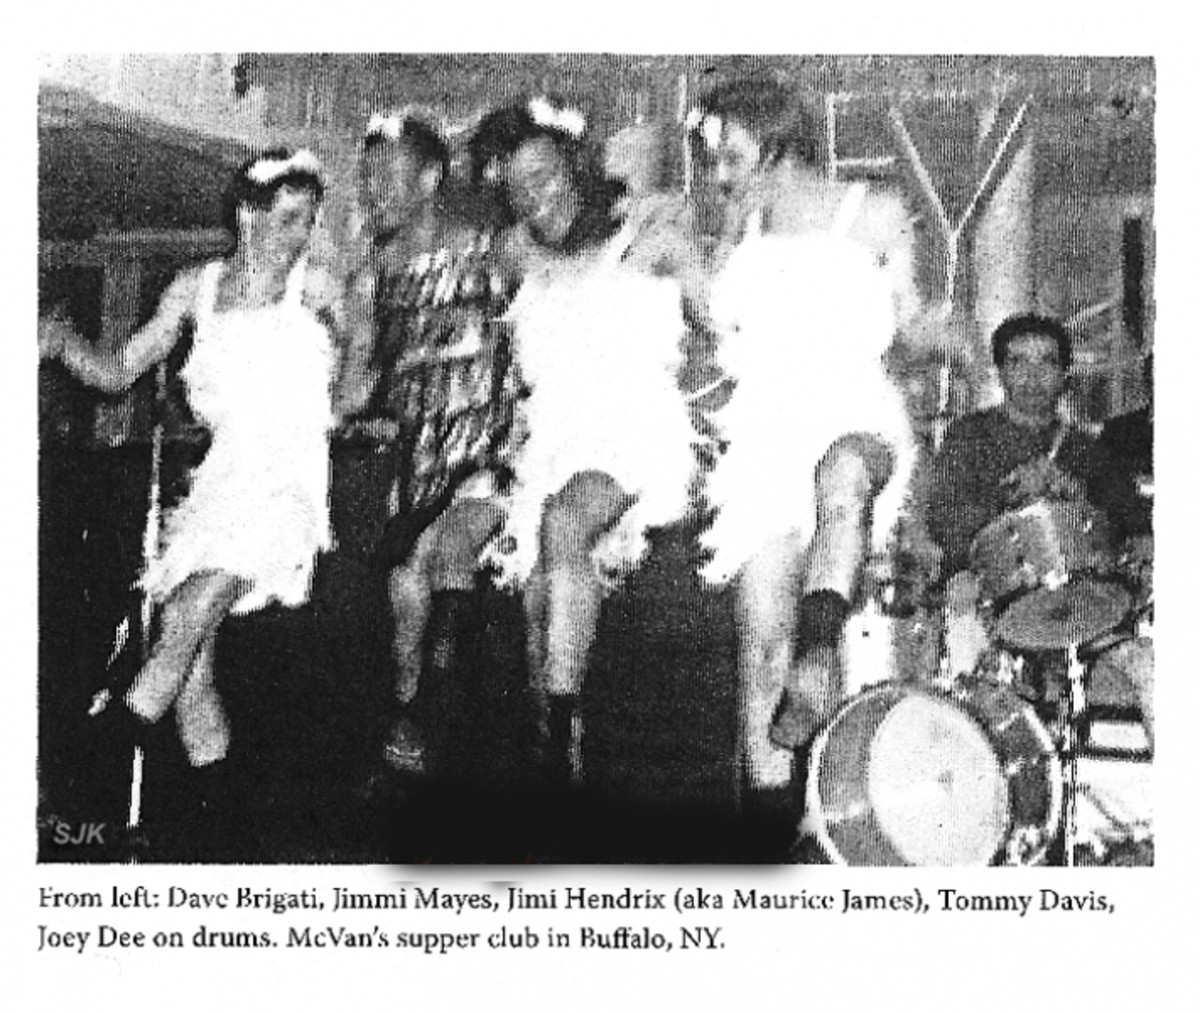 Starliters and Jimi Hendrix having fun onstage in Buffalo, NY. Courtesy of Joey Dee.